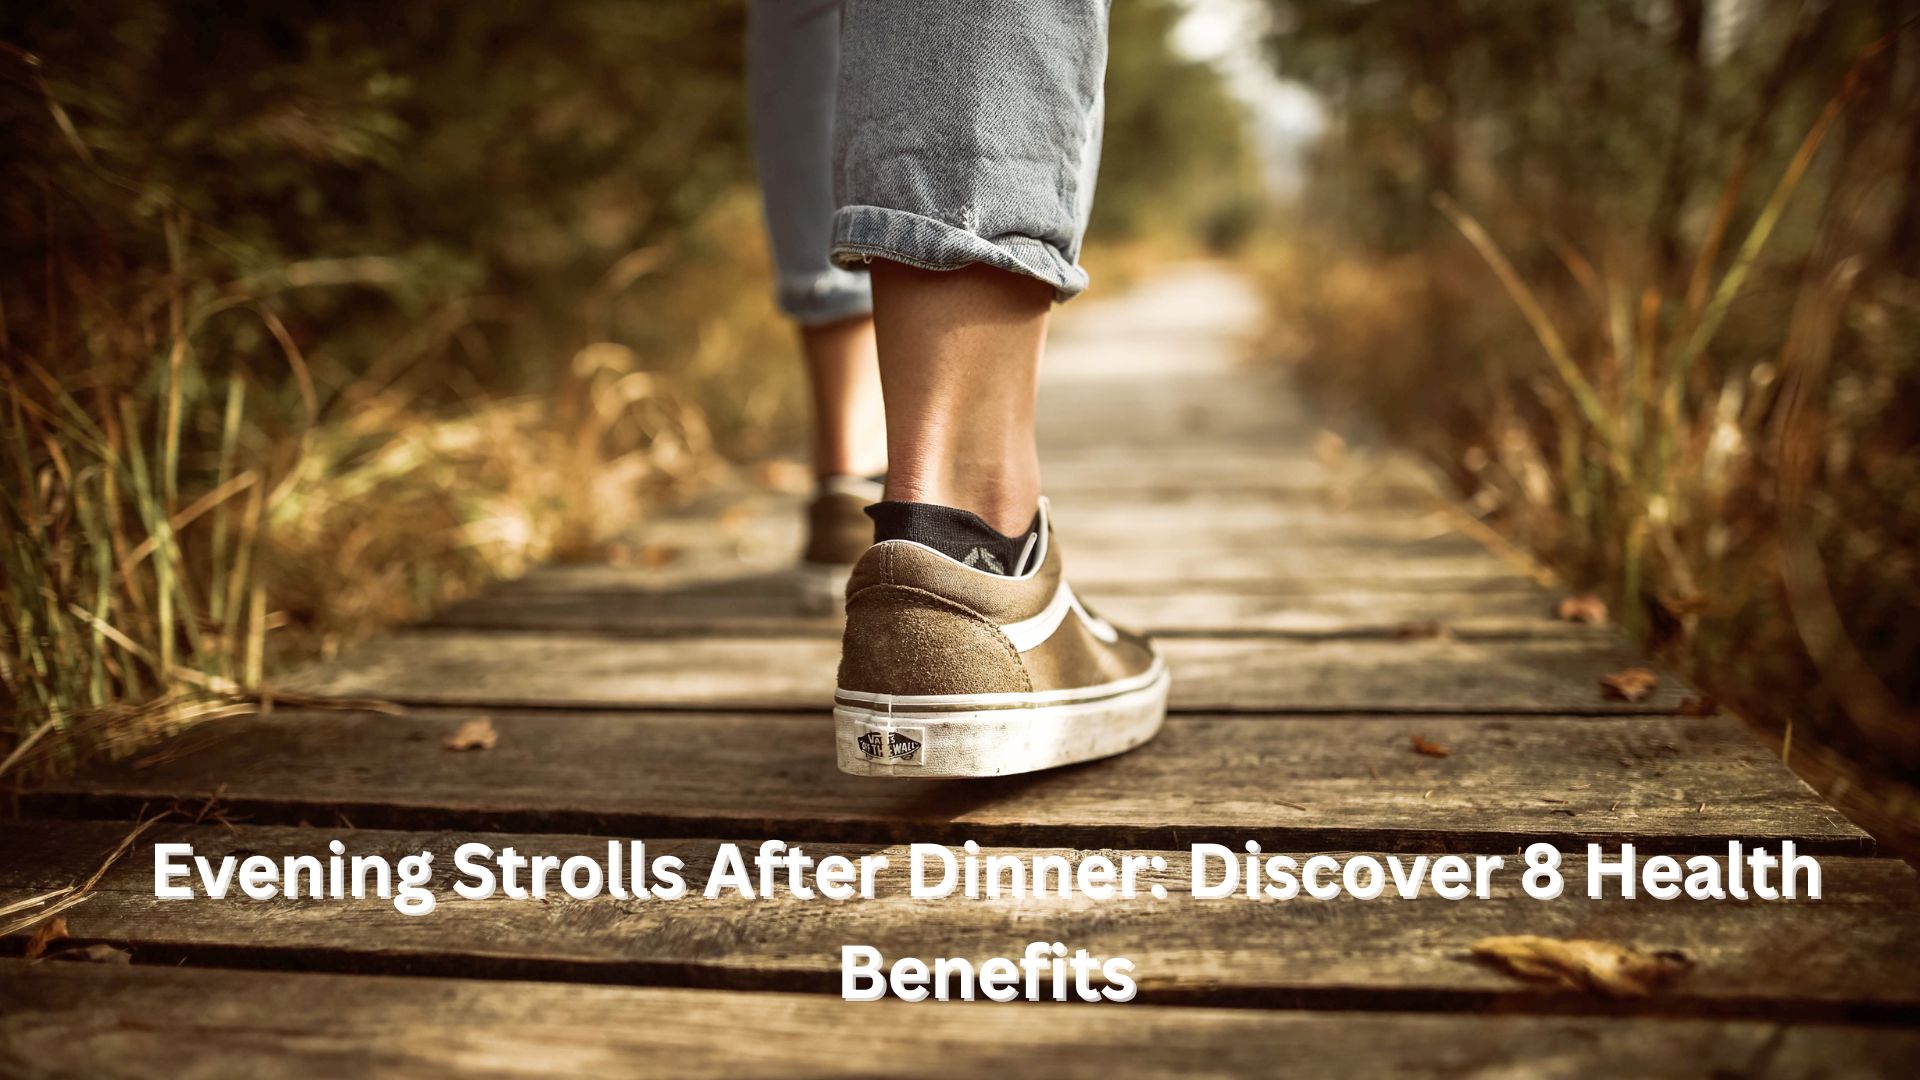 Evening Strolls After Dinner: Discover 8 Health Benefits